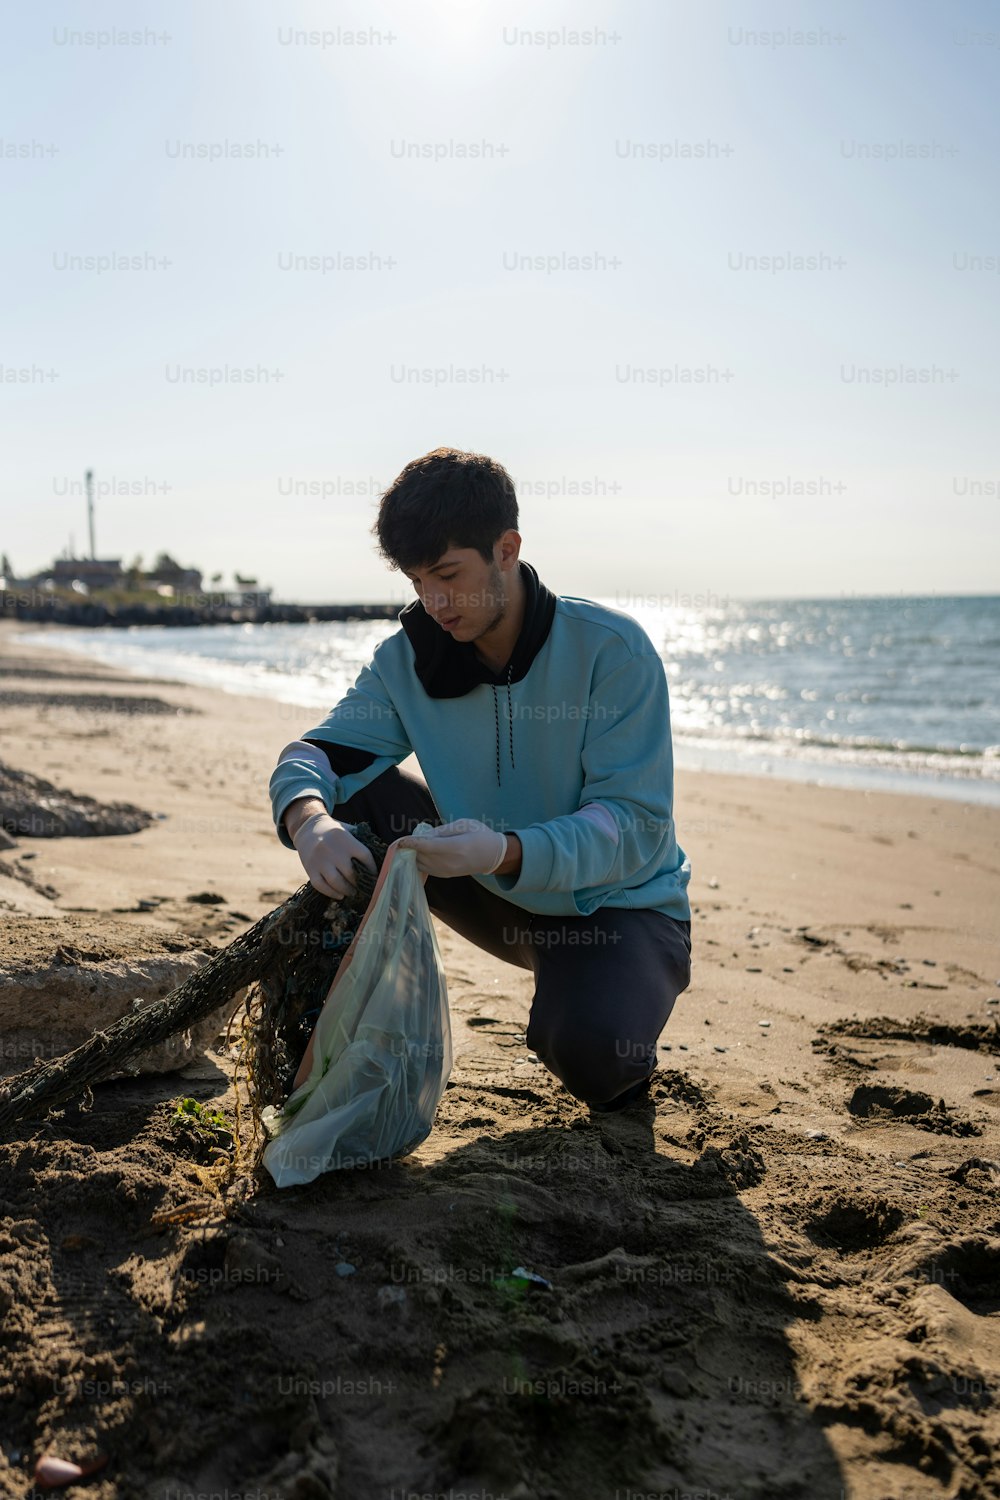 a man kneeling down on a beach next to a bag